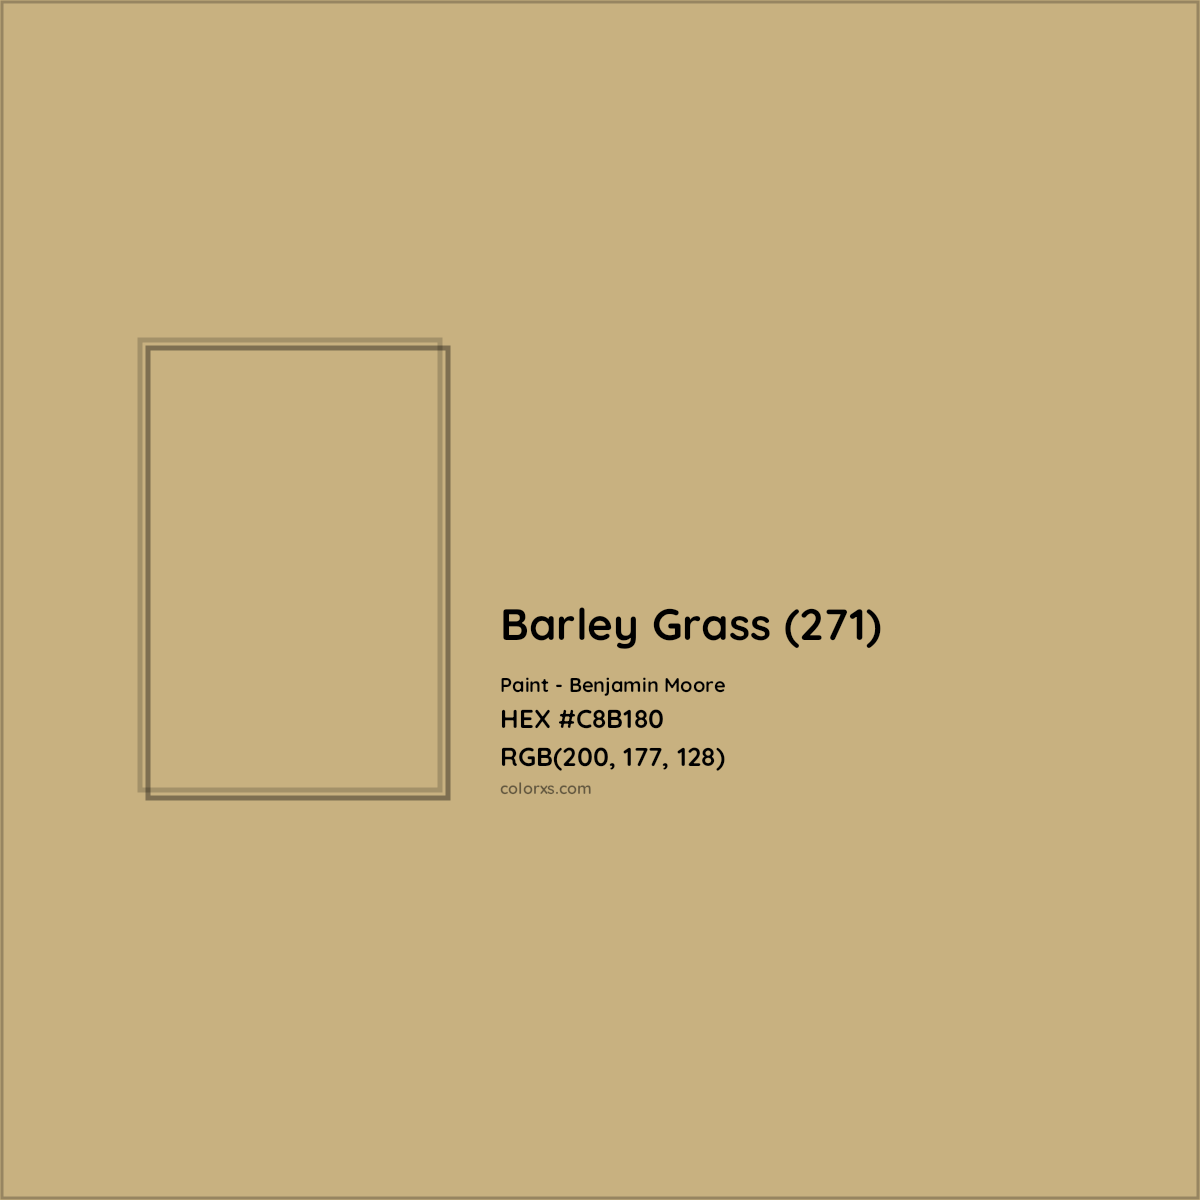 HEX #C8B180 Barley Grass (271) Paint Benjamin Moore - Color Code